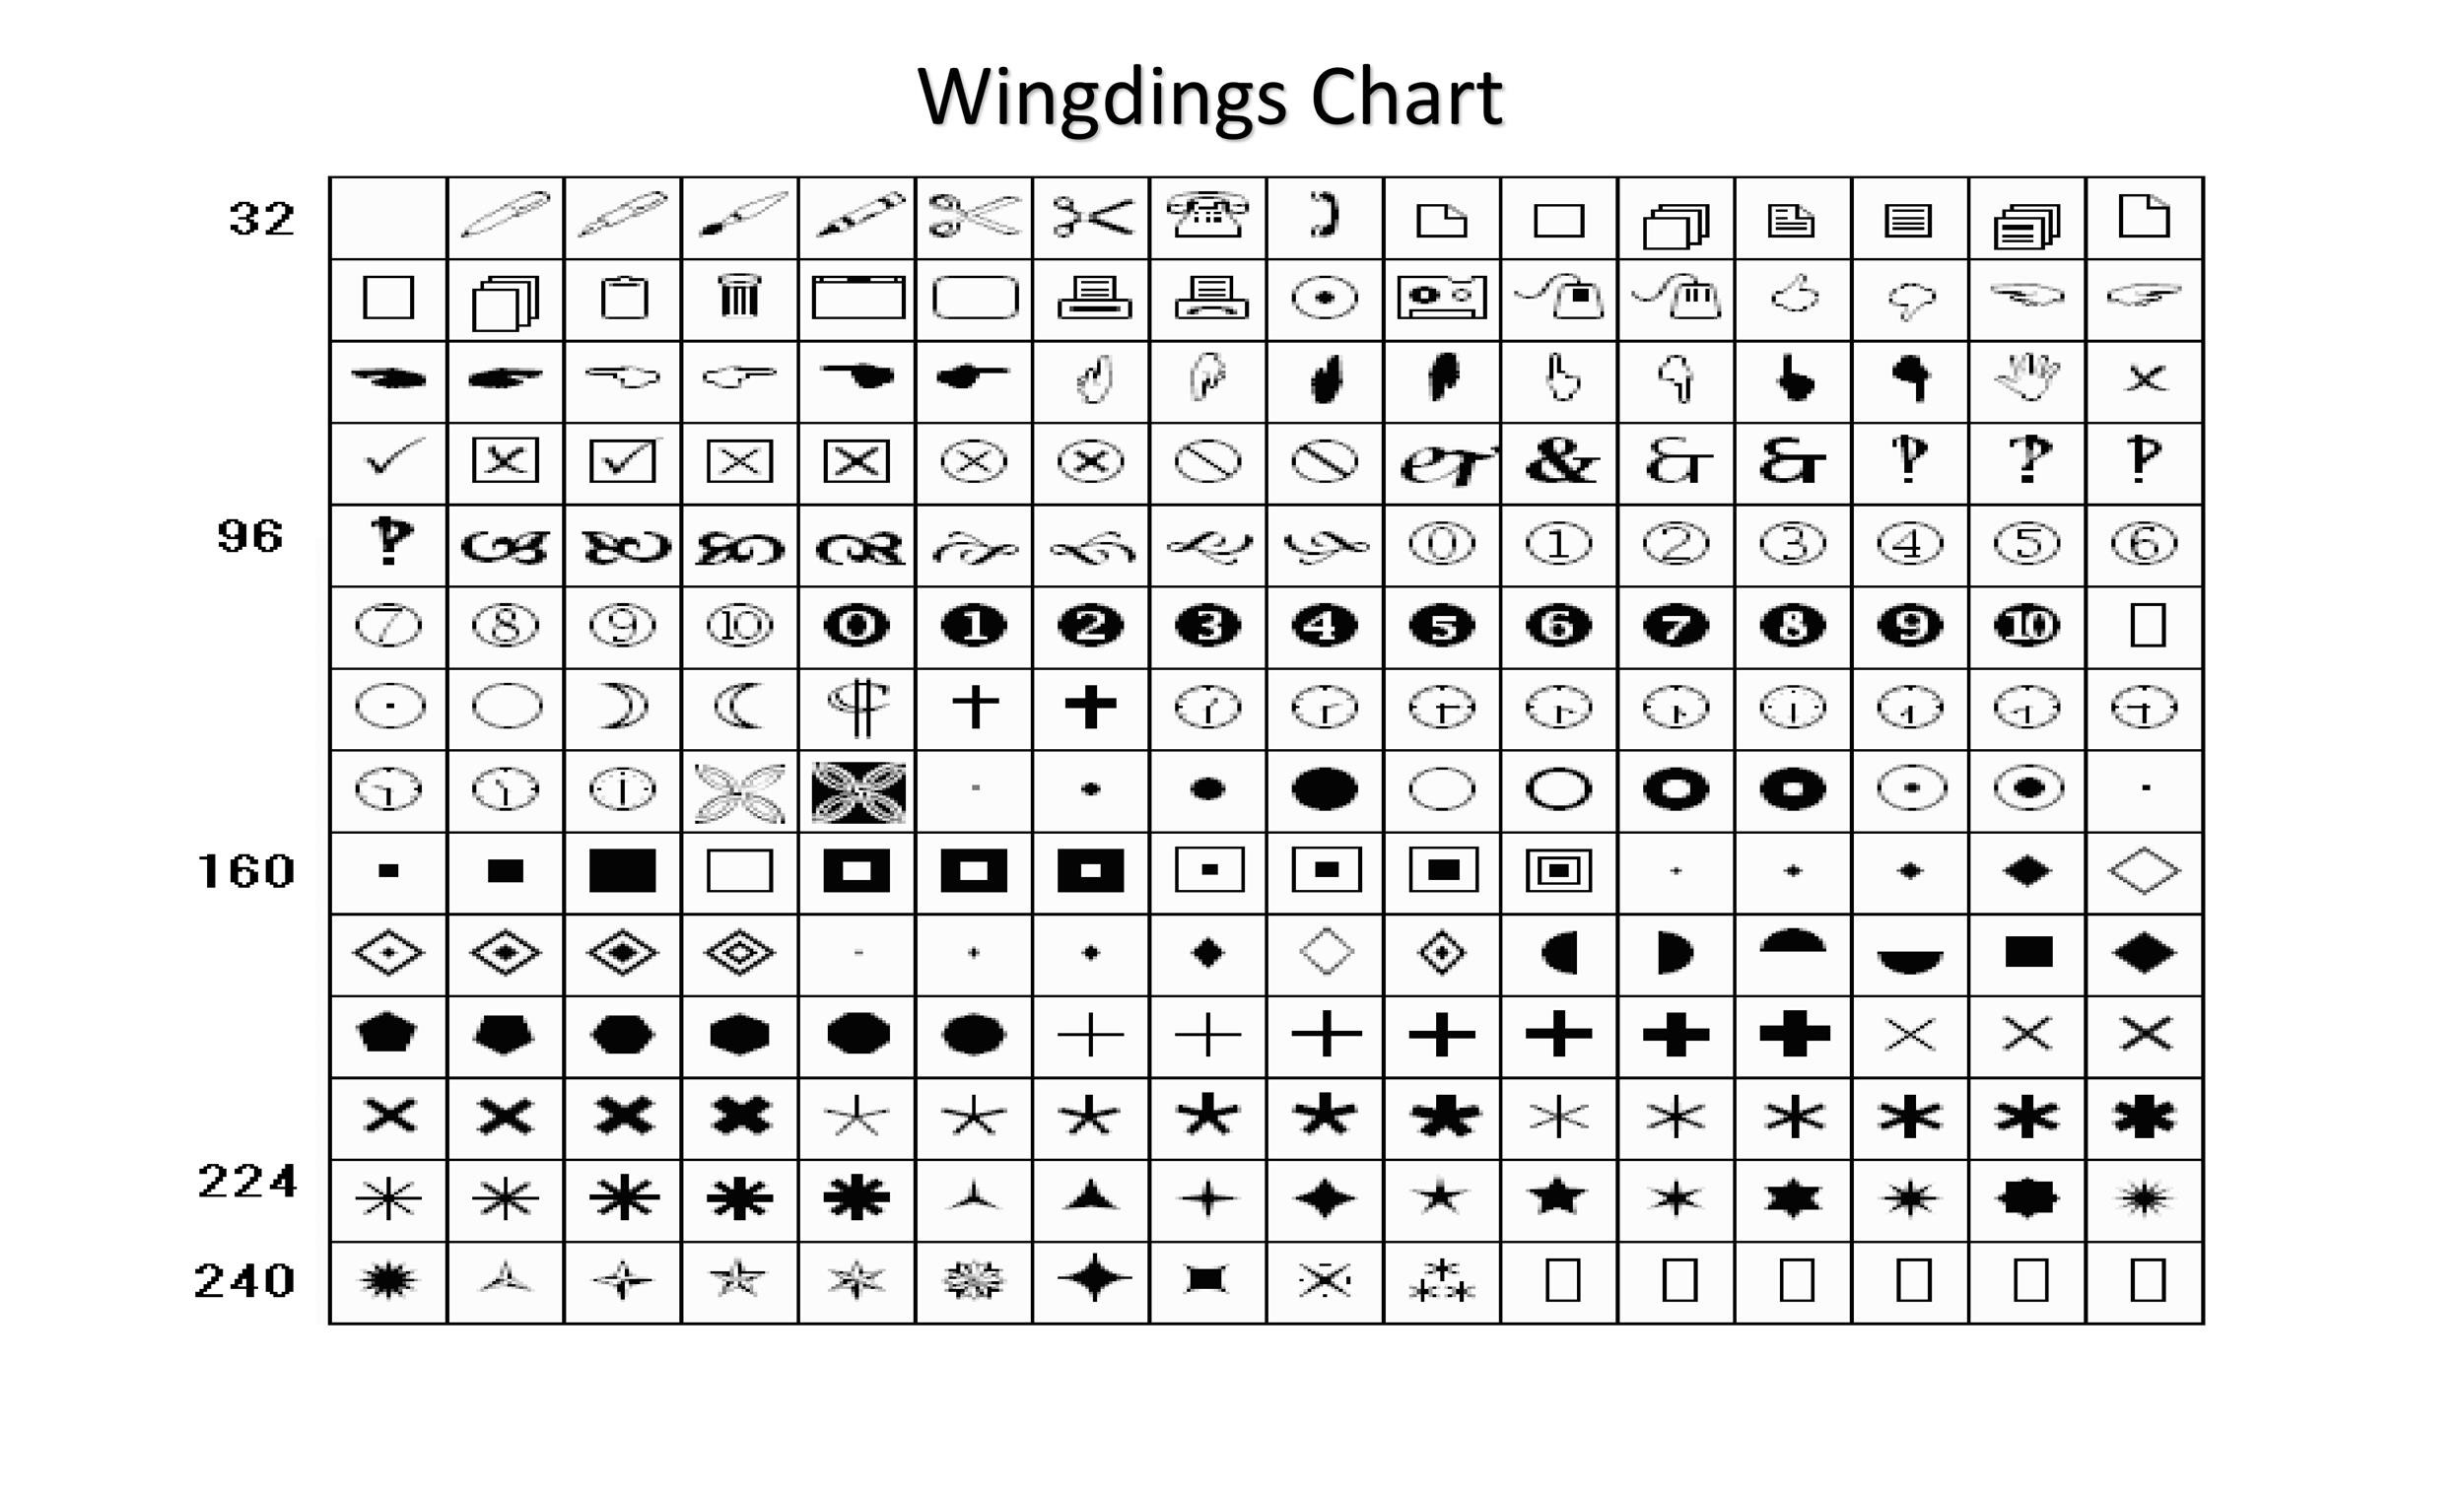 Wingdings 2 Chart